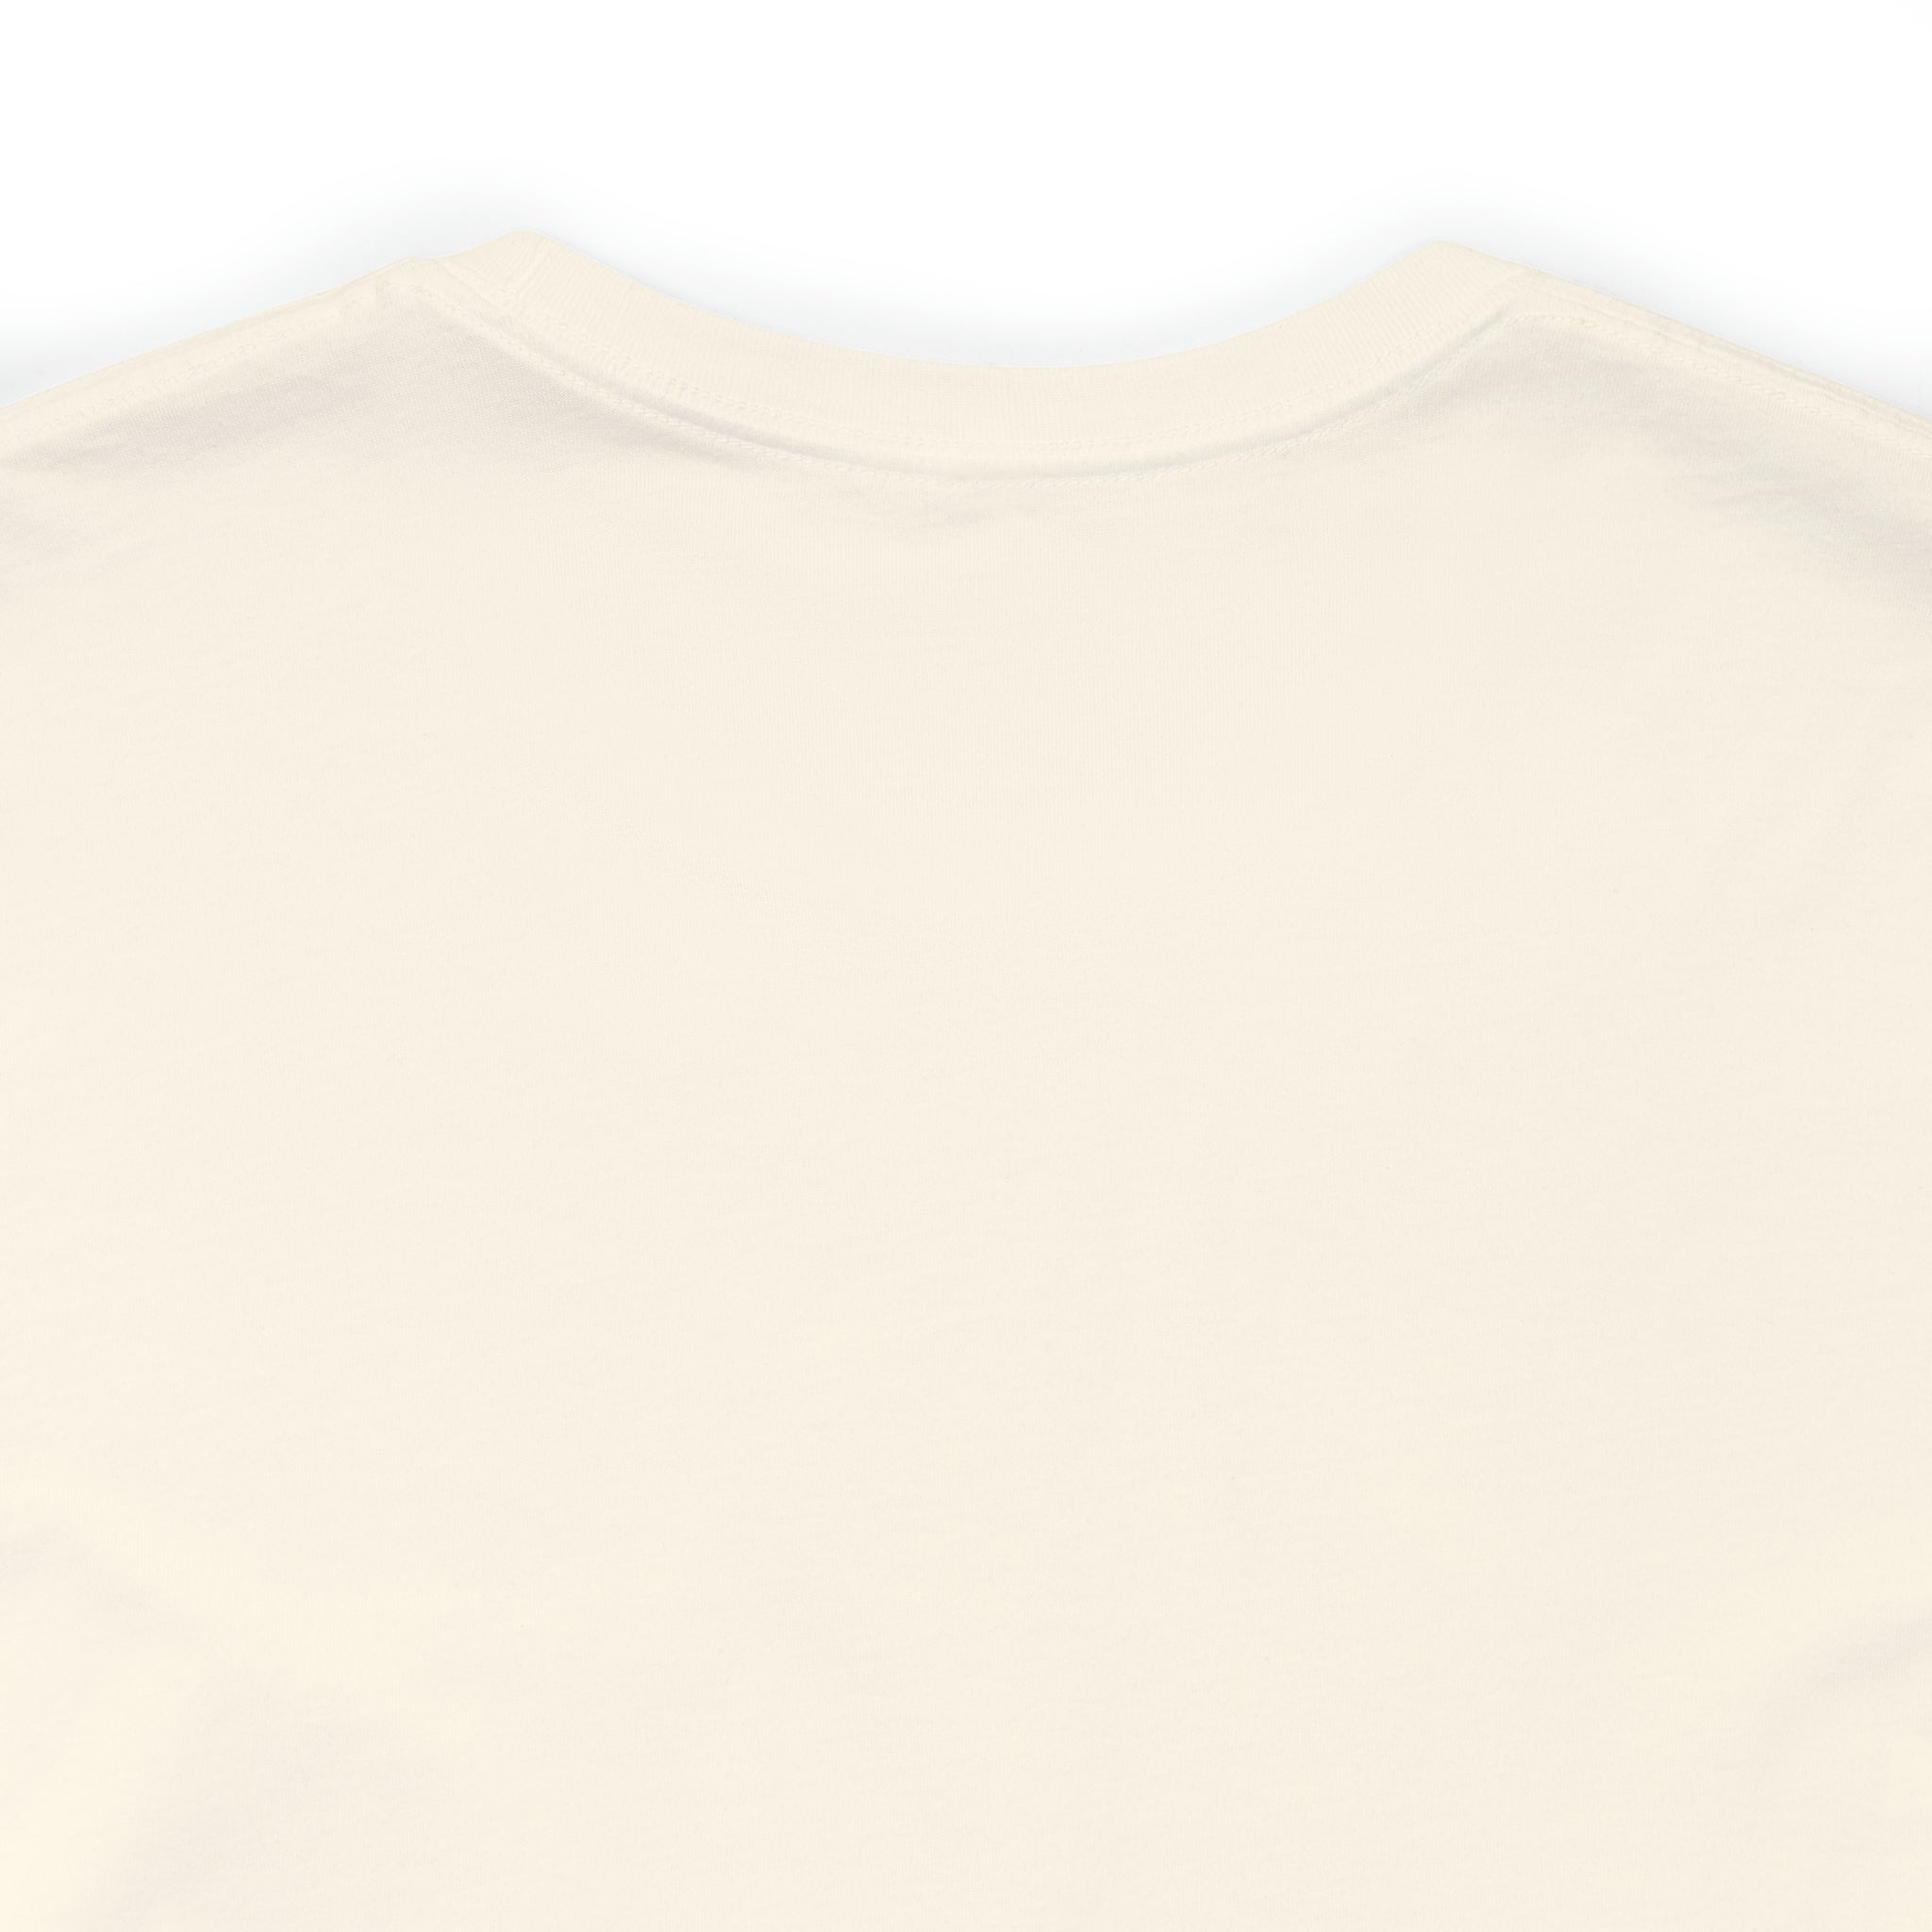 Camiseta de manga corta de punto unisex